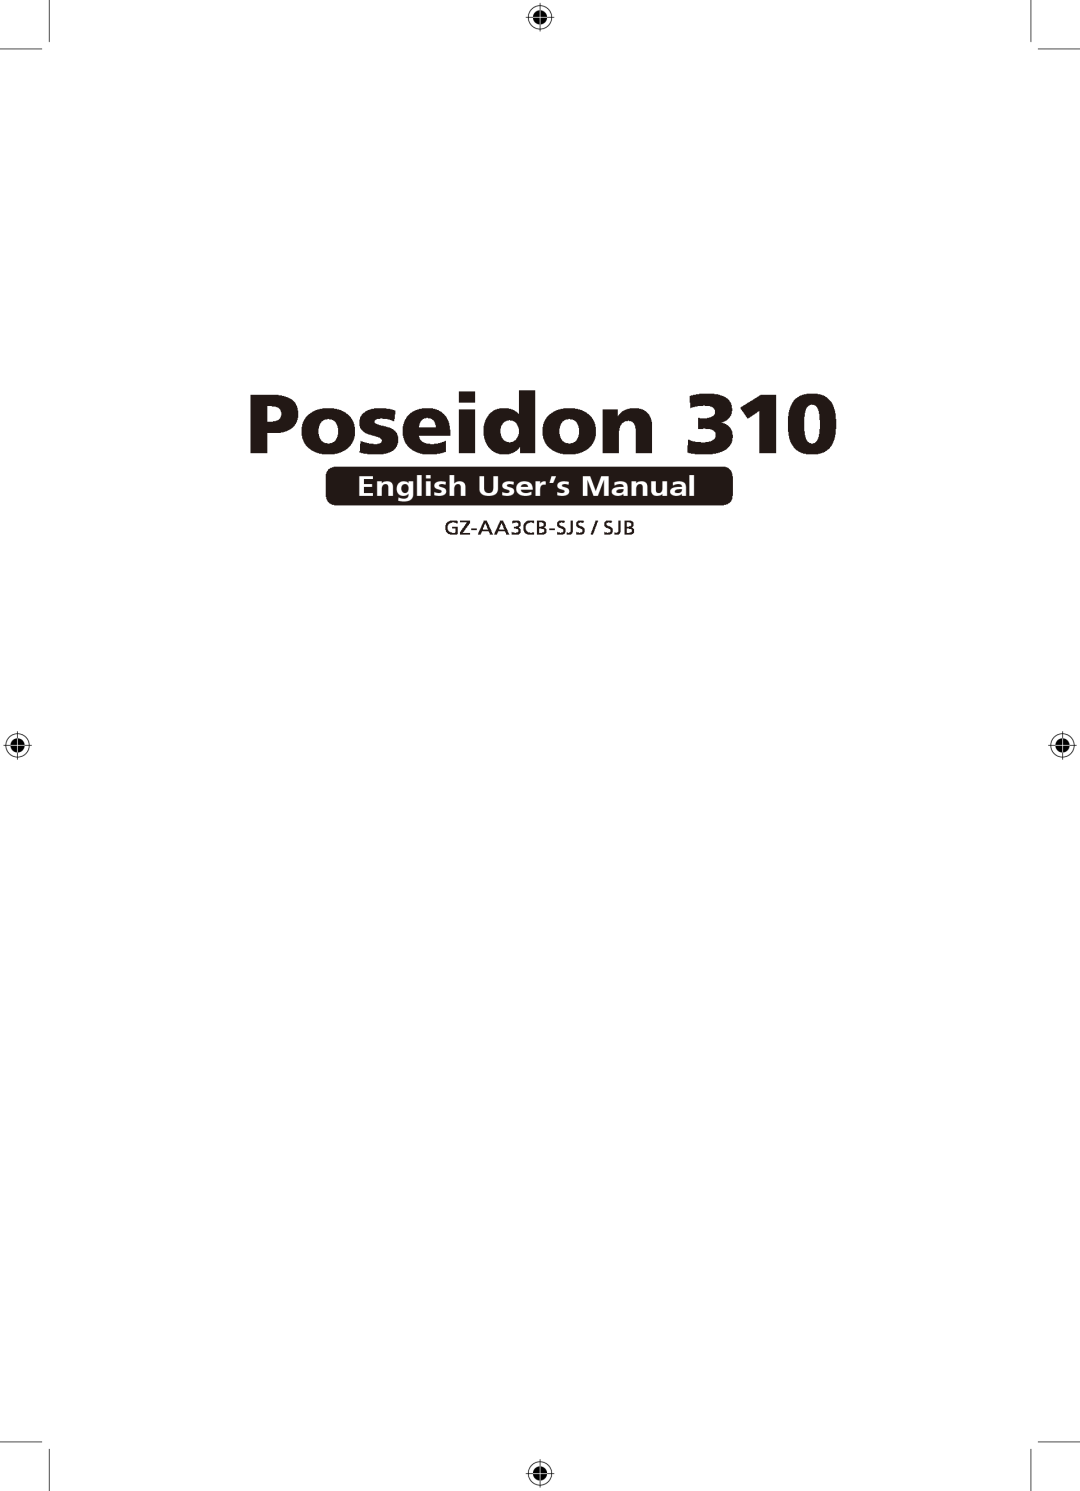 Gigabyte 310 user manual Poseidon, English User’s Manual 